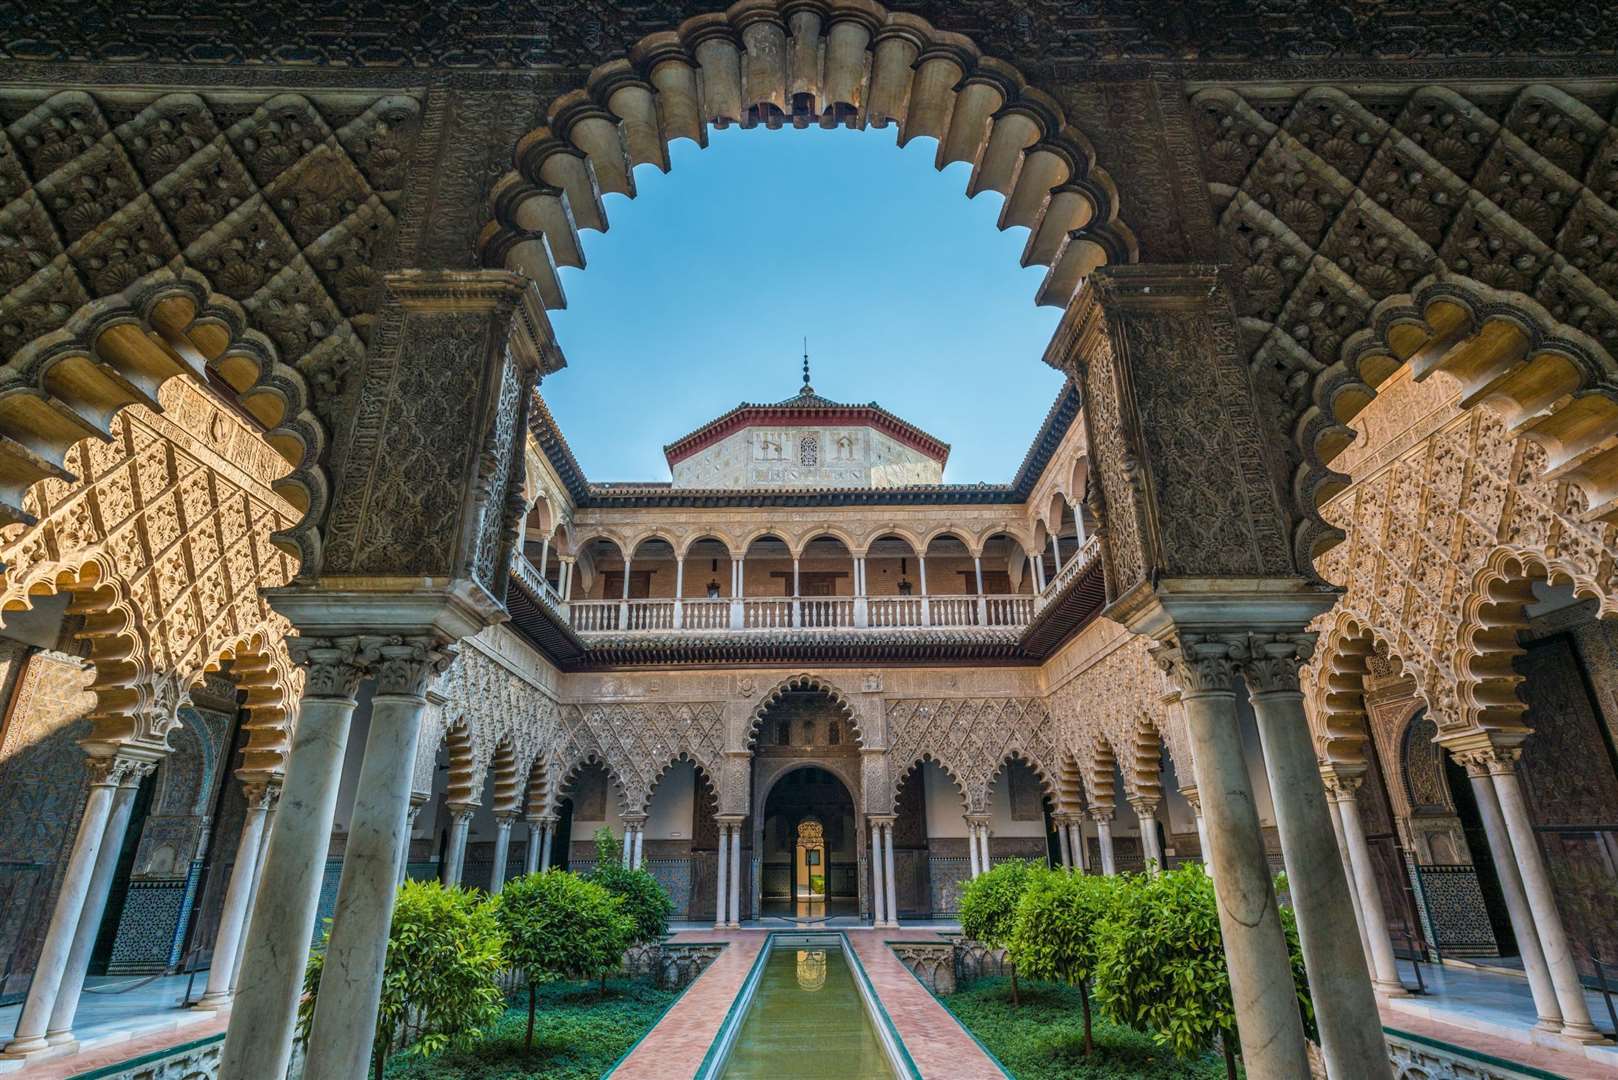 The Real Alcazar (Royal Palace) in Seville (Anibal Trejo/Turismo de Sevilla/PA)